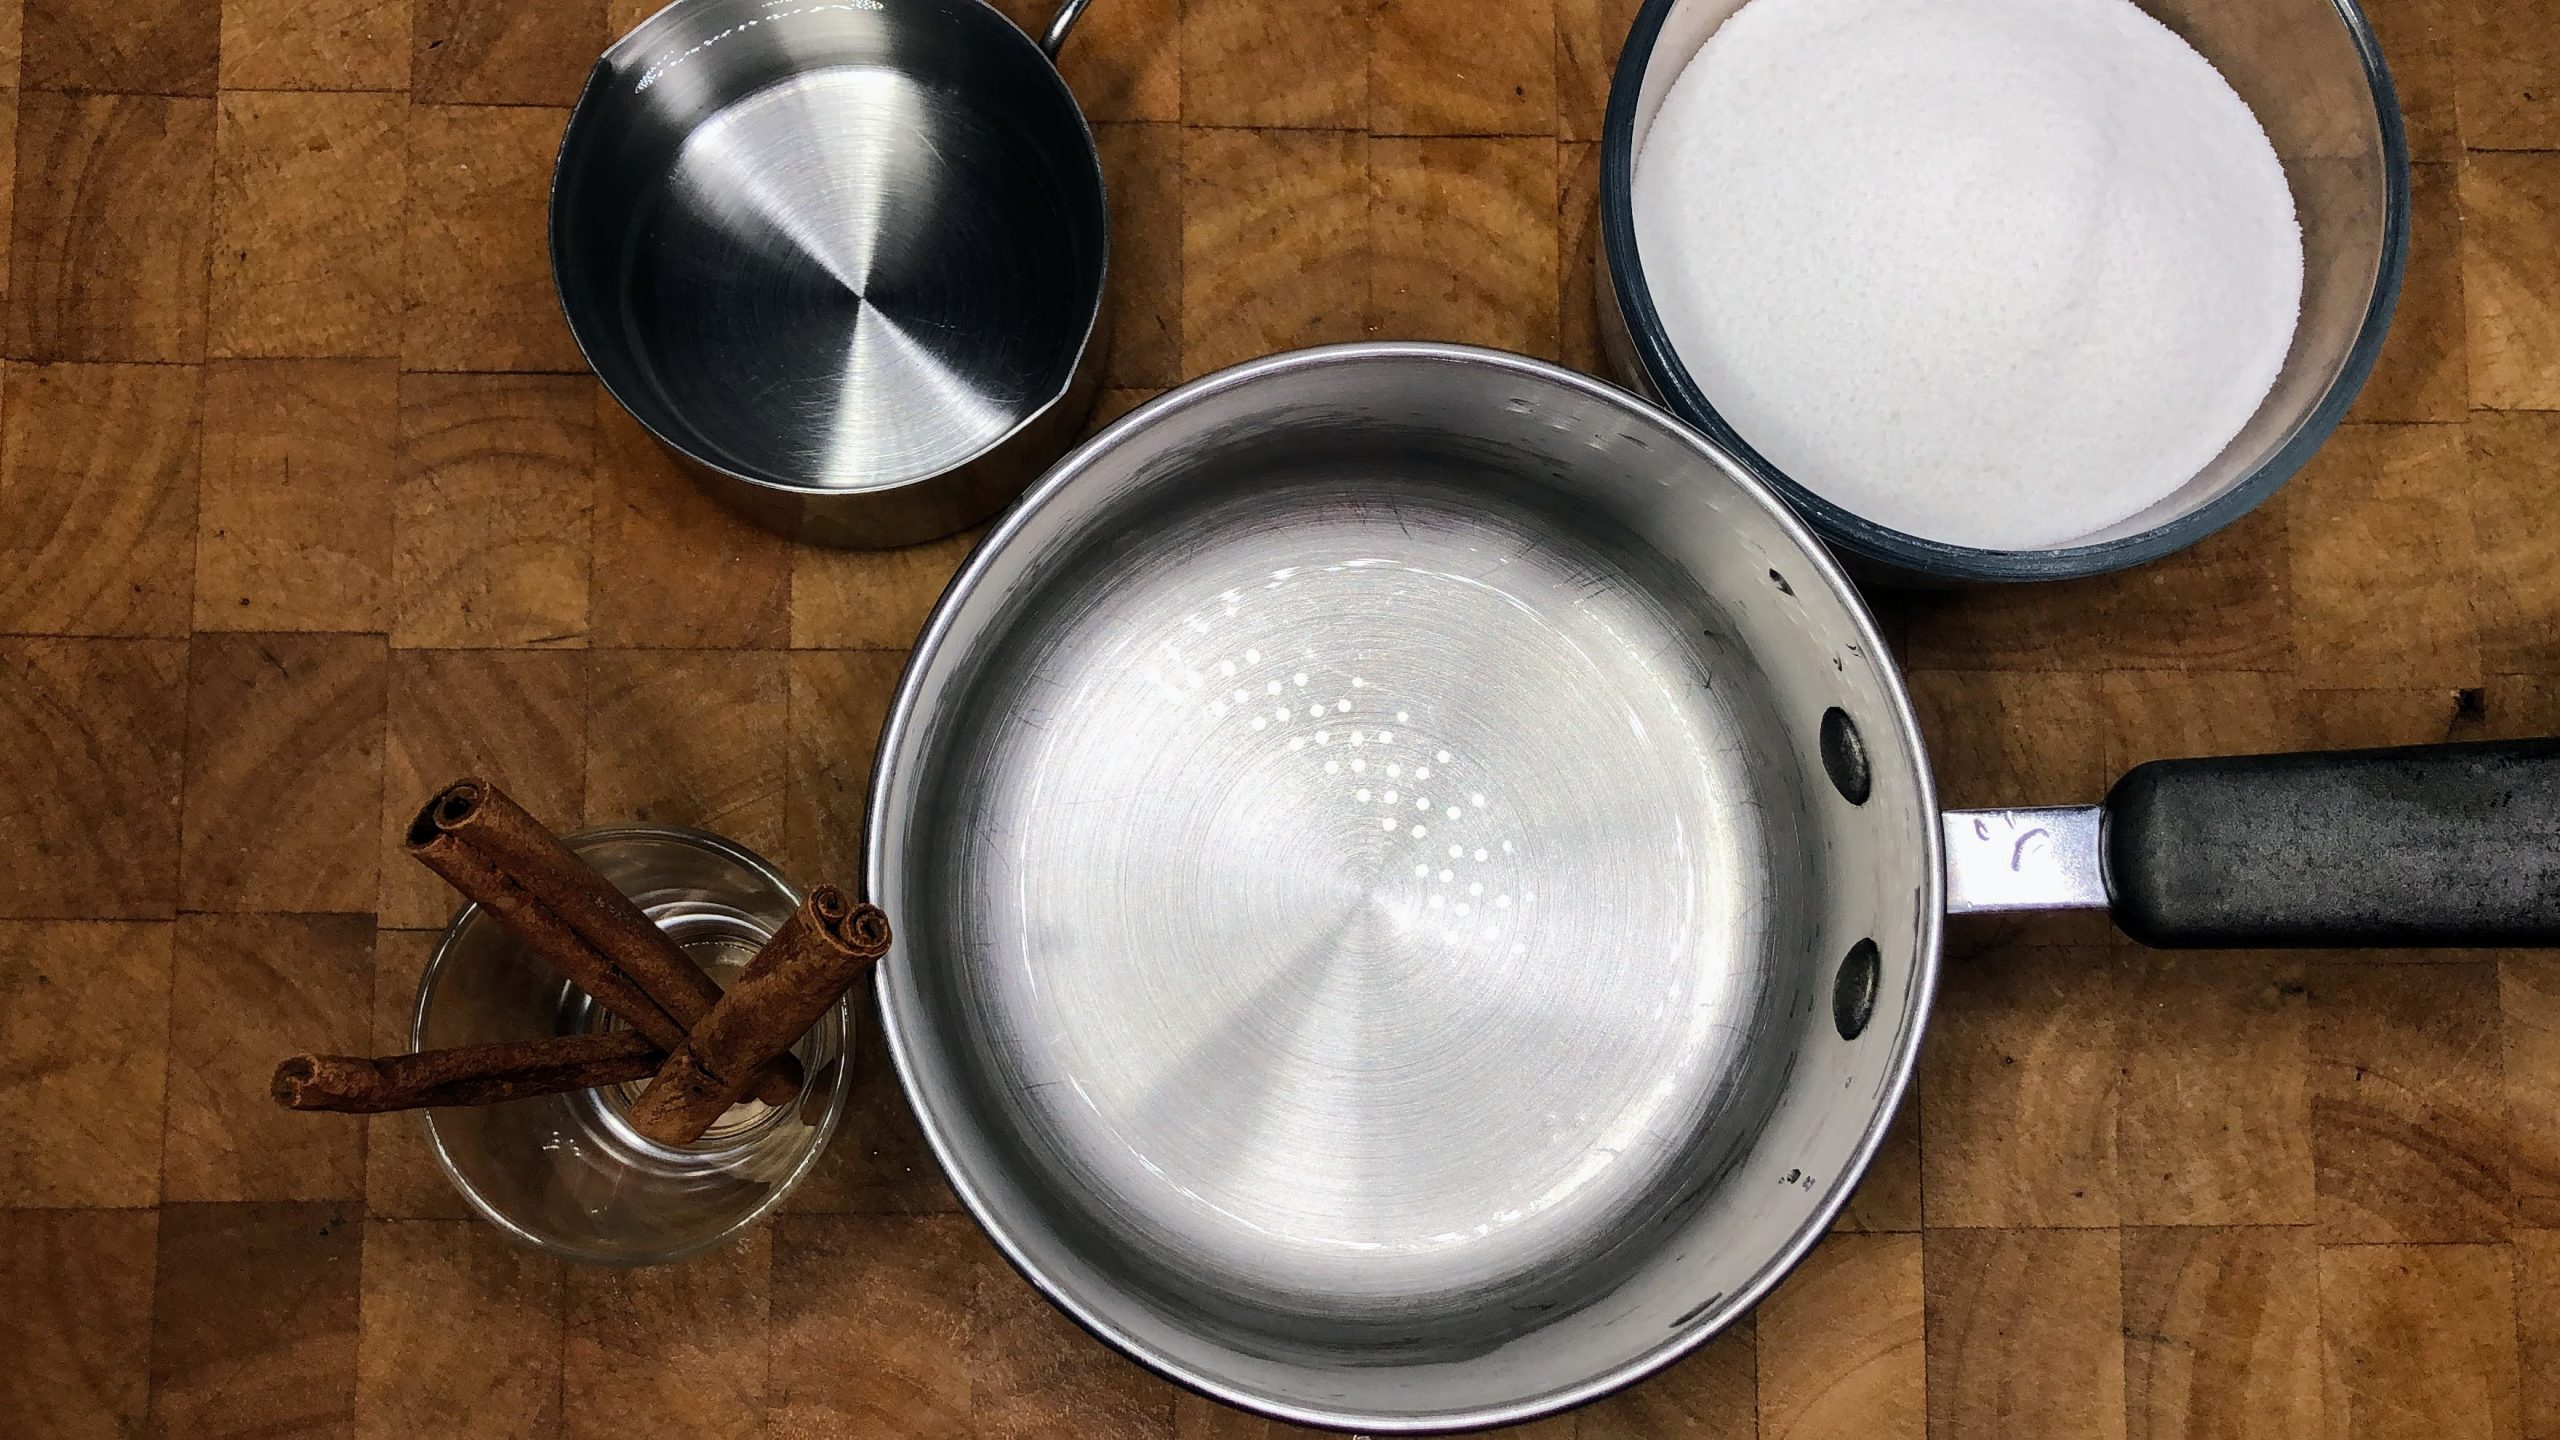 Bowls of cinnamon sticks, sugar and water next to a saucepan.